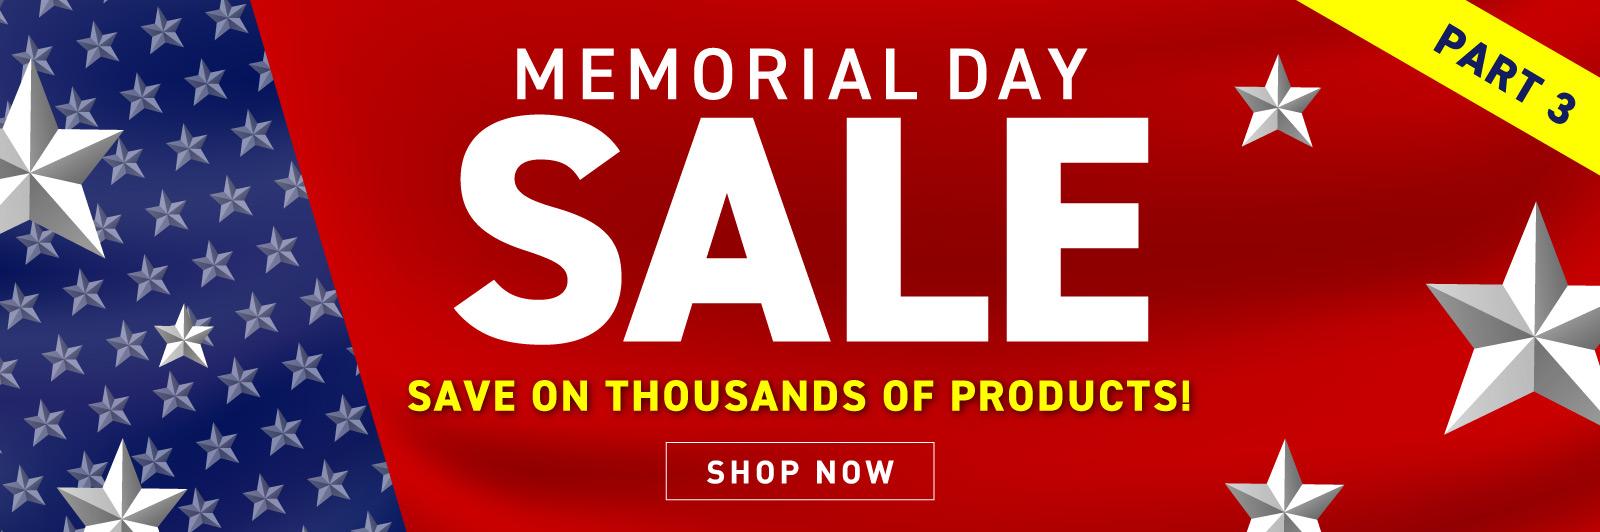 Memorial Day Sales, Deals, Offers